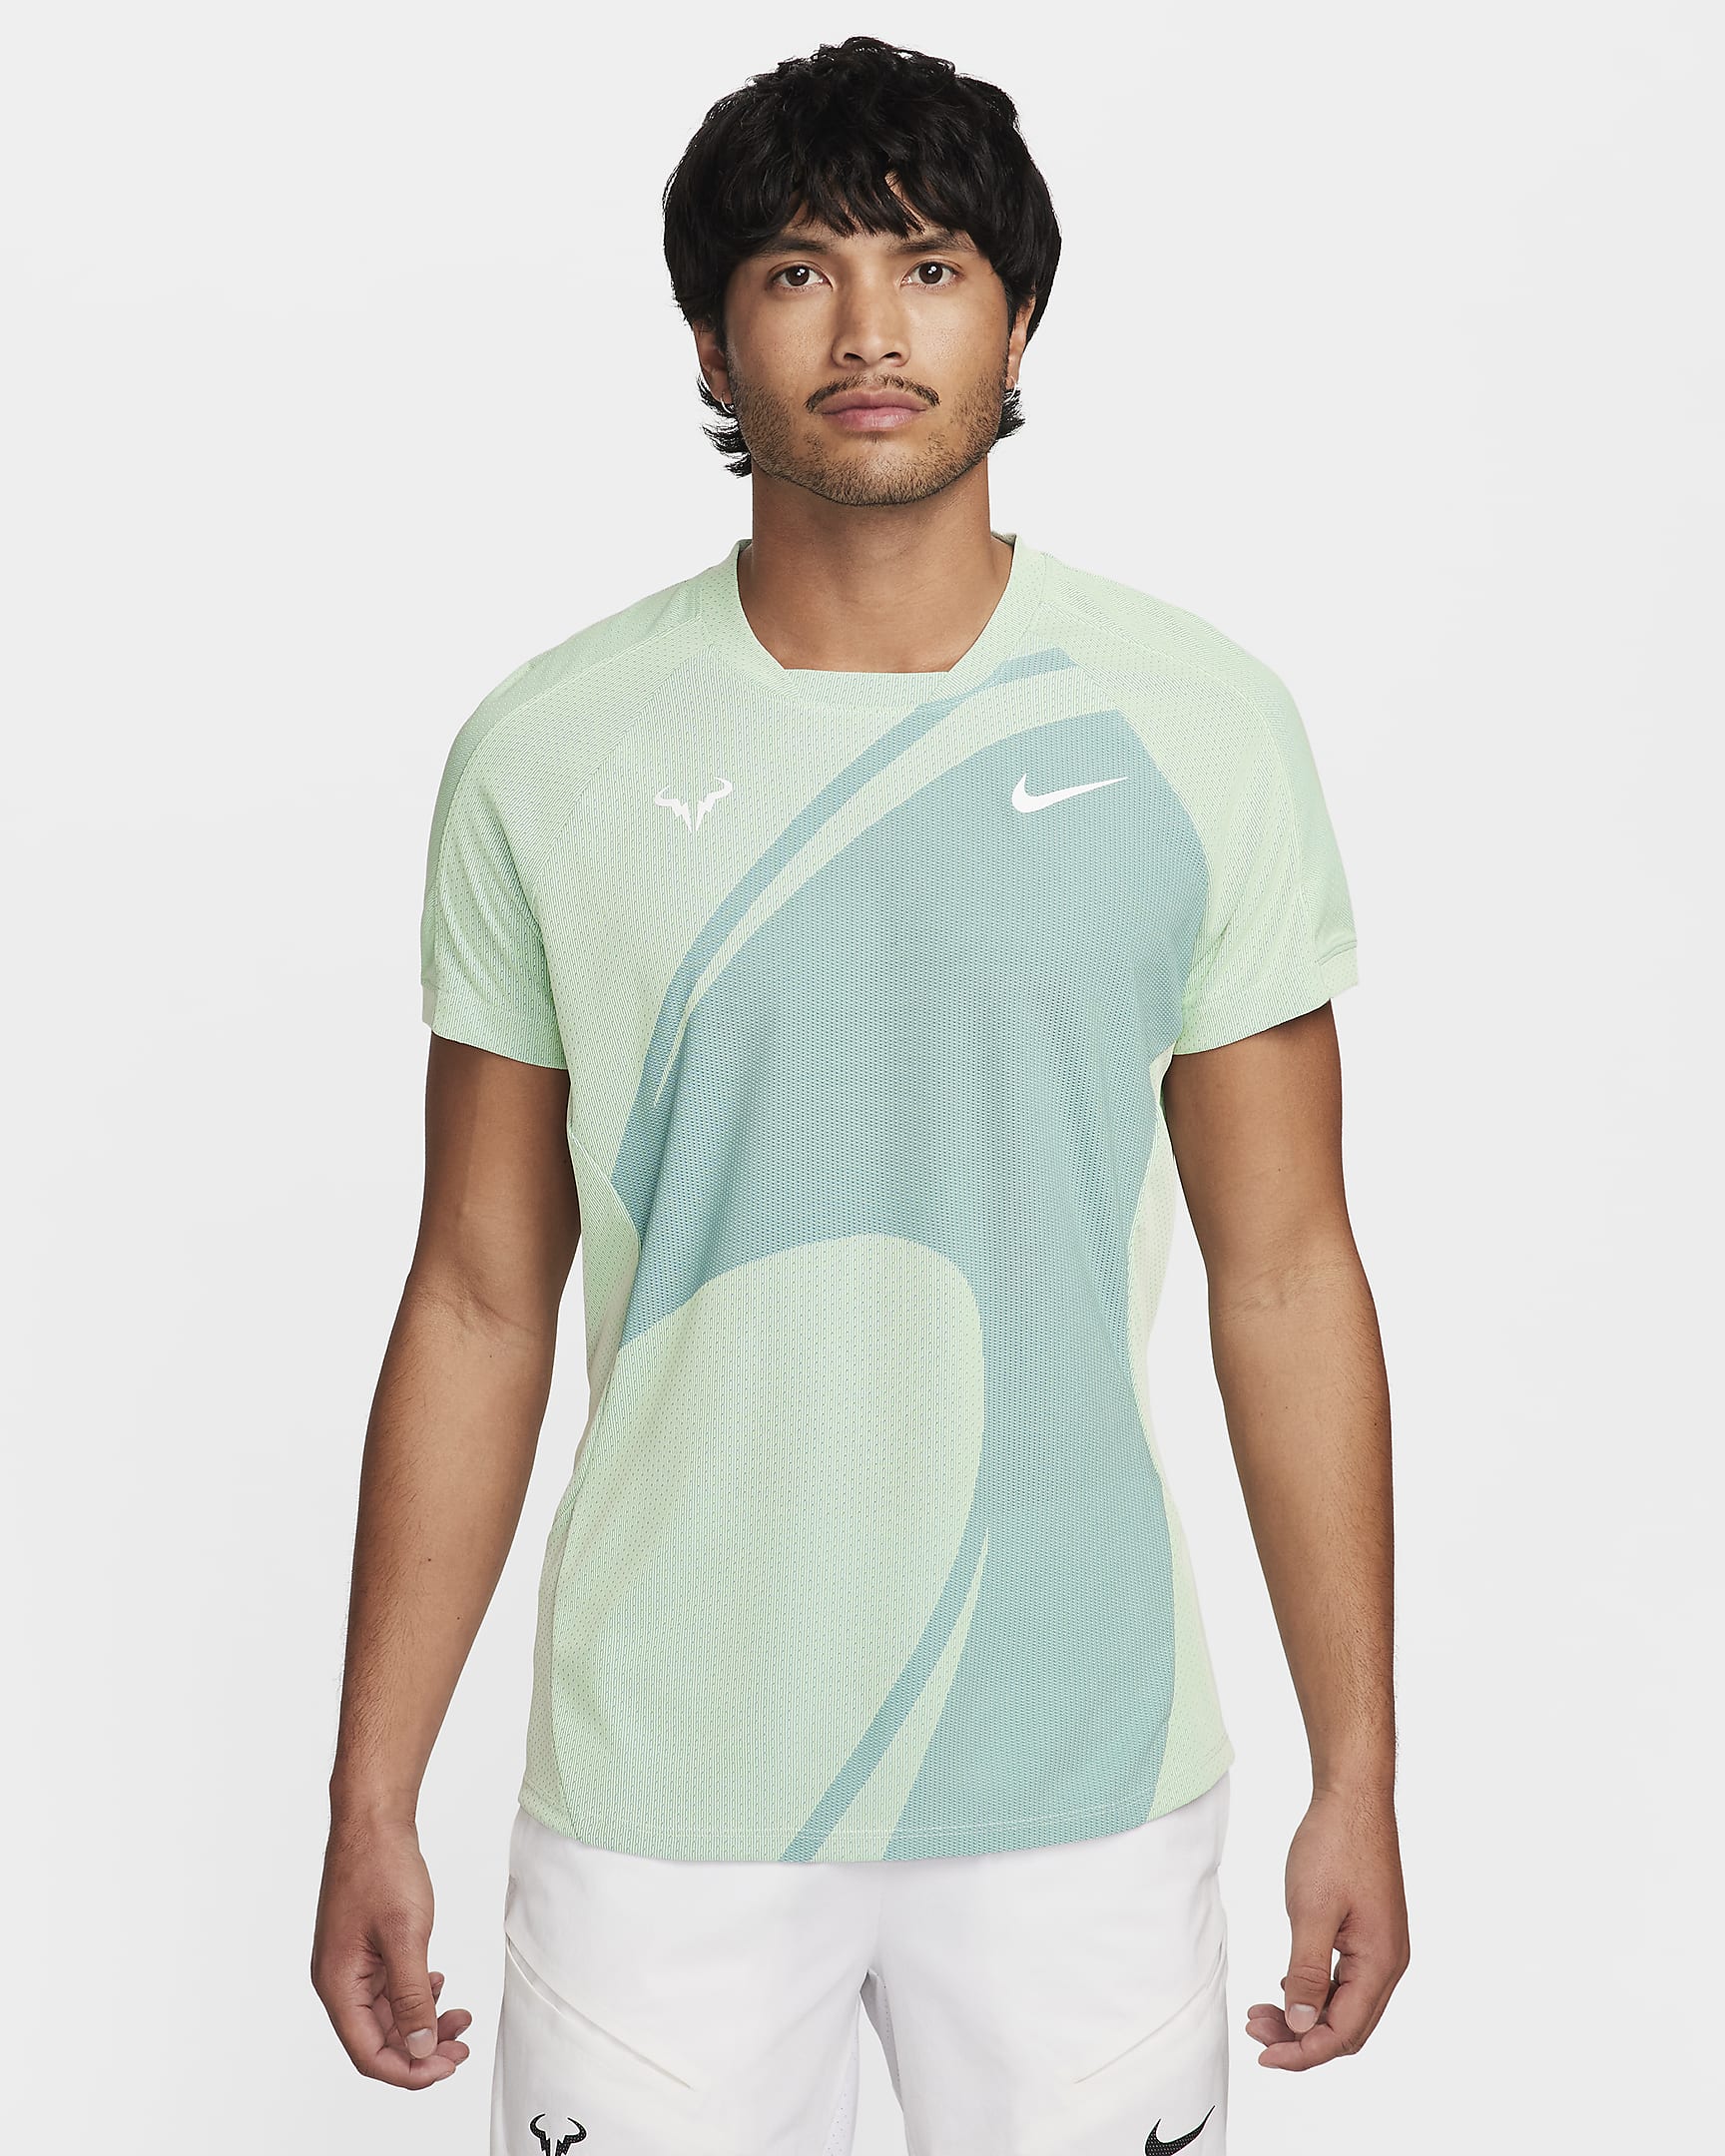 Rafa Men's Nike Dri-FIT ADV Short-Sleeve Tennis Top. Nike IL